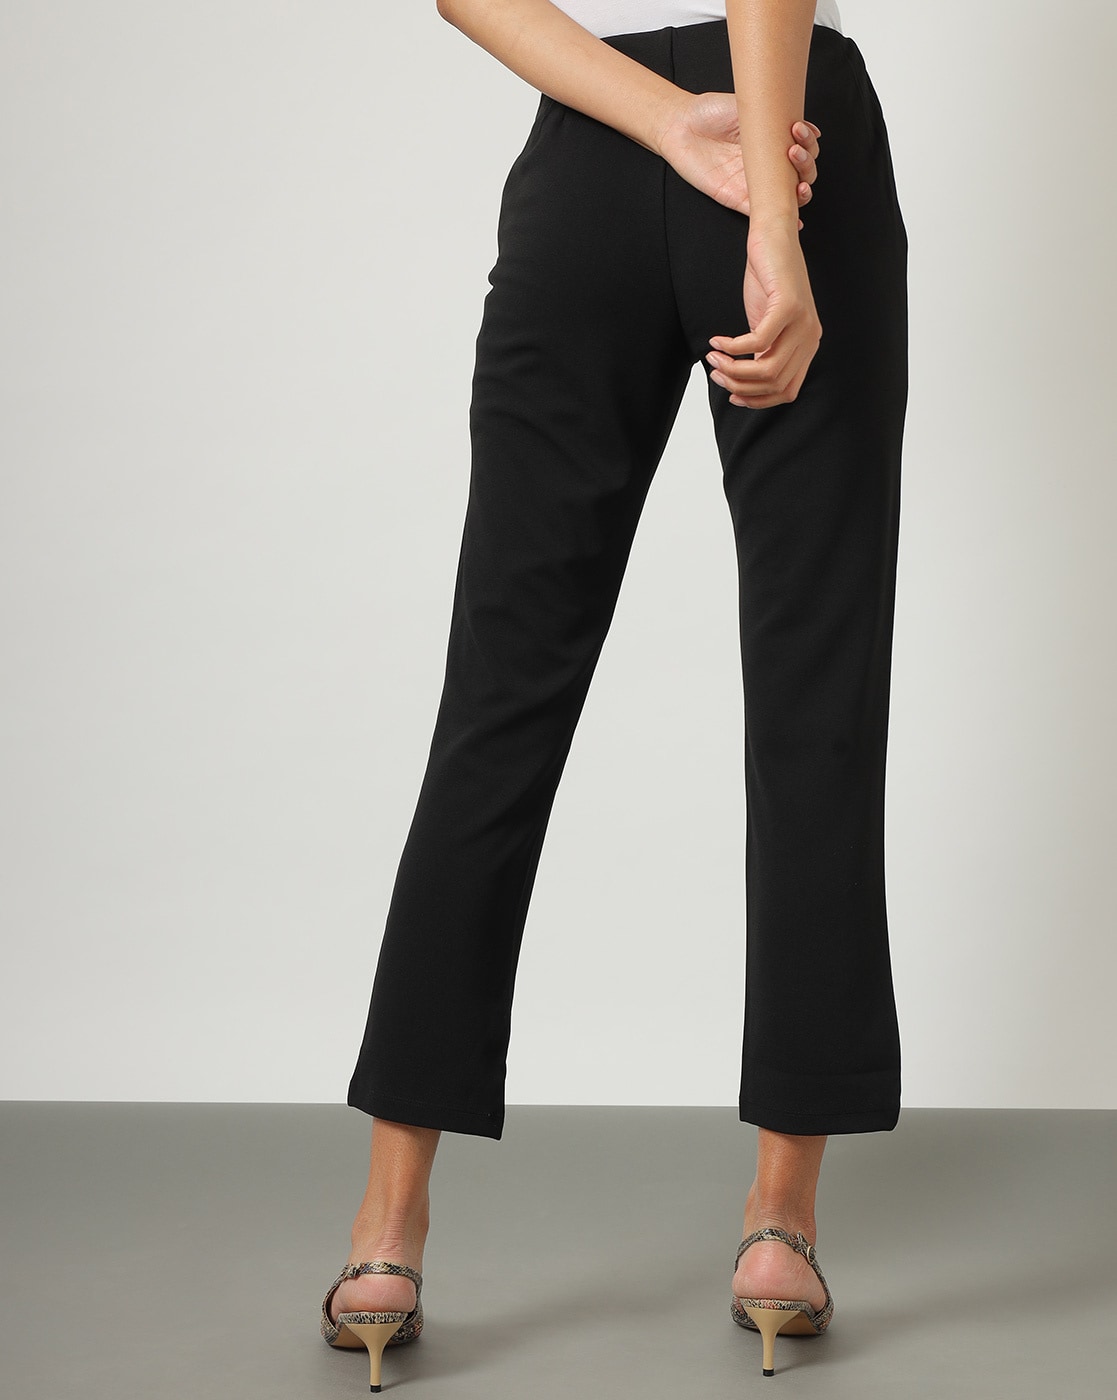 fcityin  Comfort And Stylish Side Pocket Trouser For Women  Classic  Ravishing